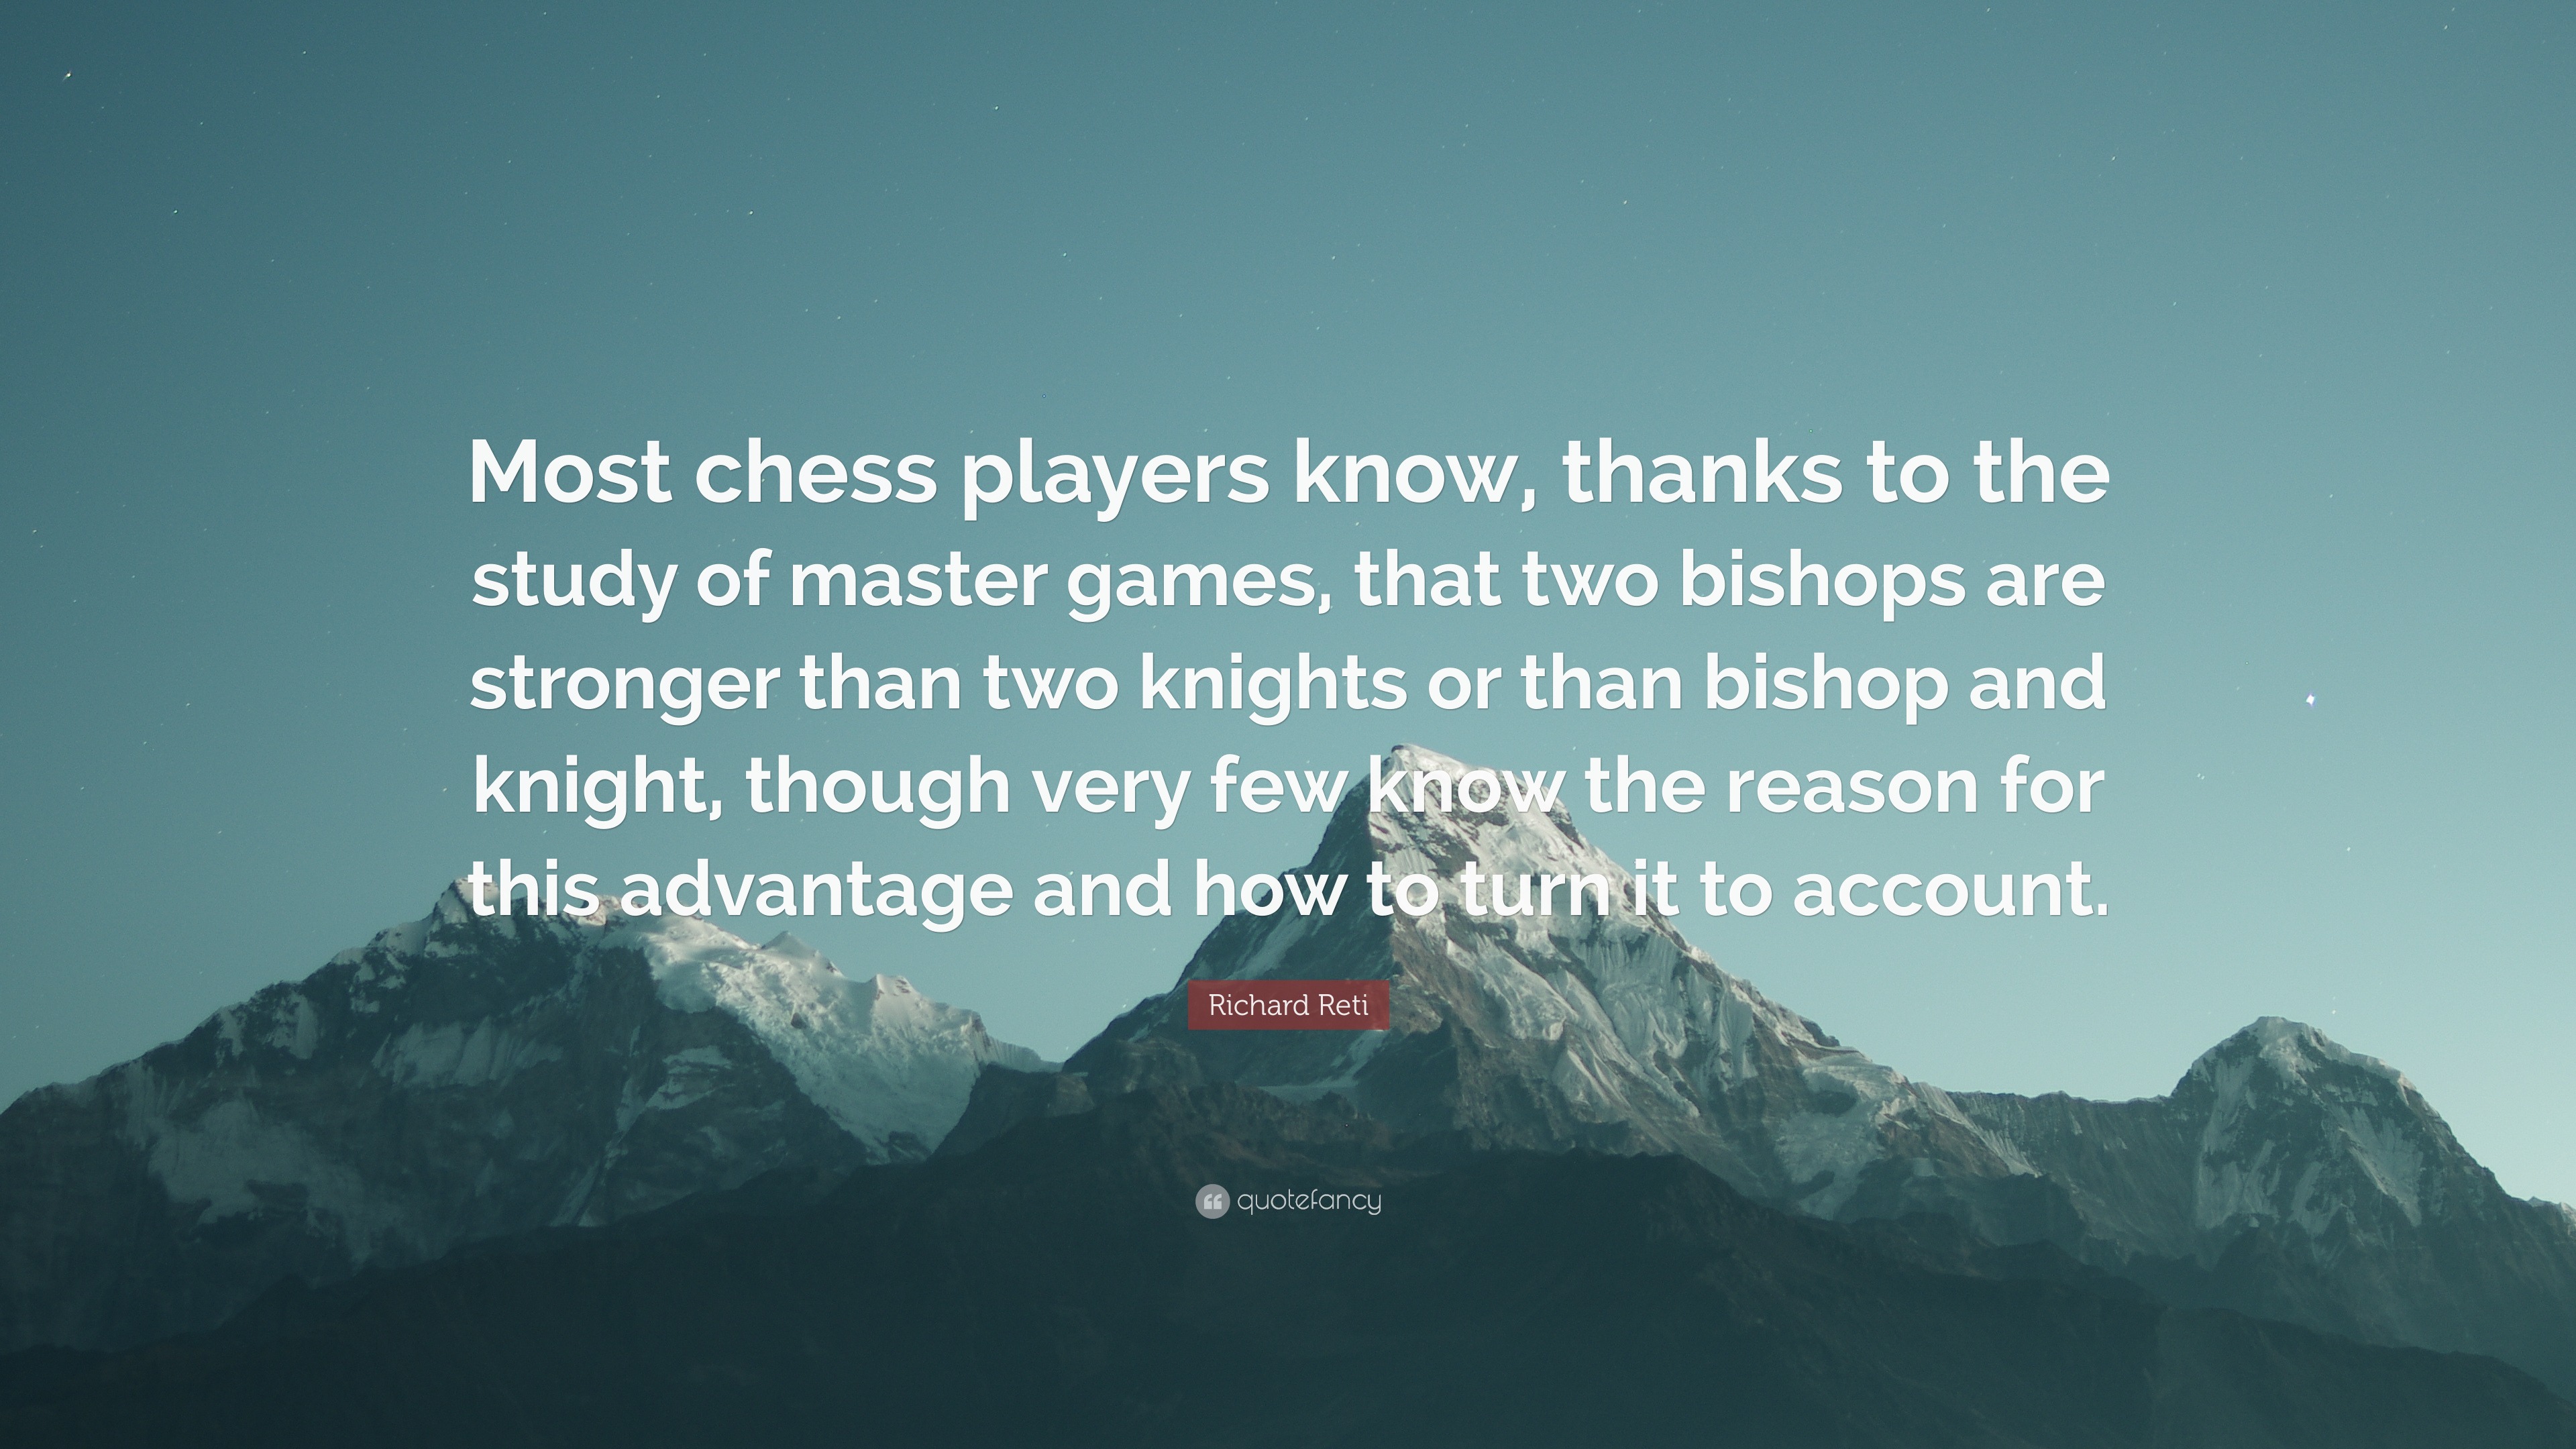 Richard Reti  Top Chess Players 